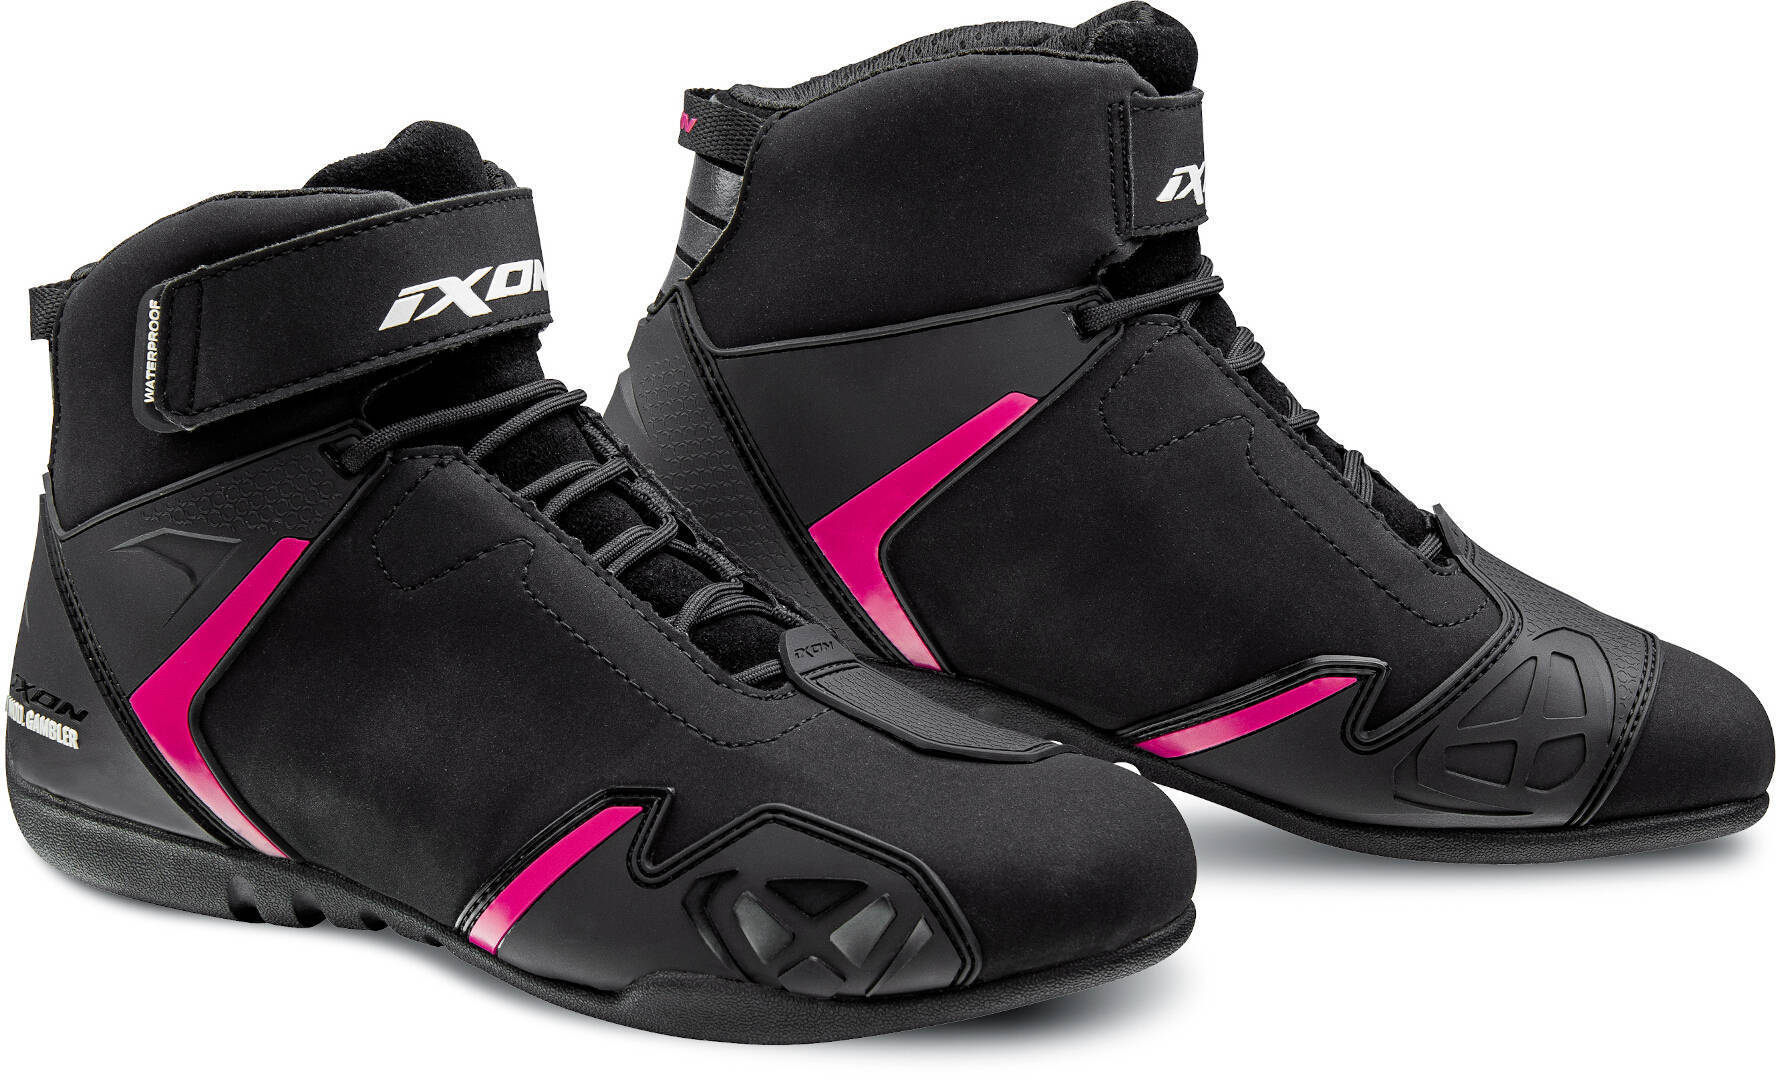 Ixon Gambler WP Ladies Motorcycle Shoes, black-pink, Size 40 for Women, black-pink, Size 40 for Women